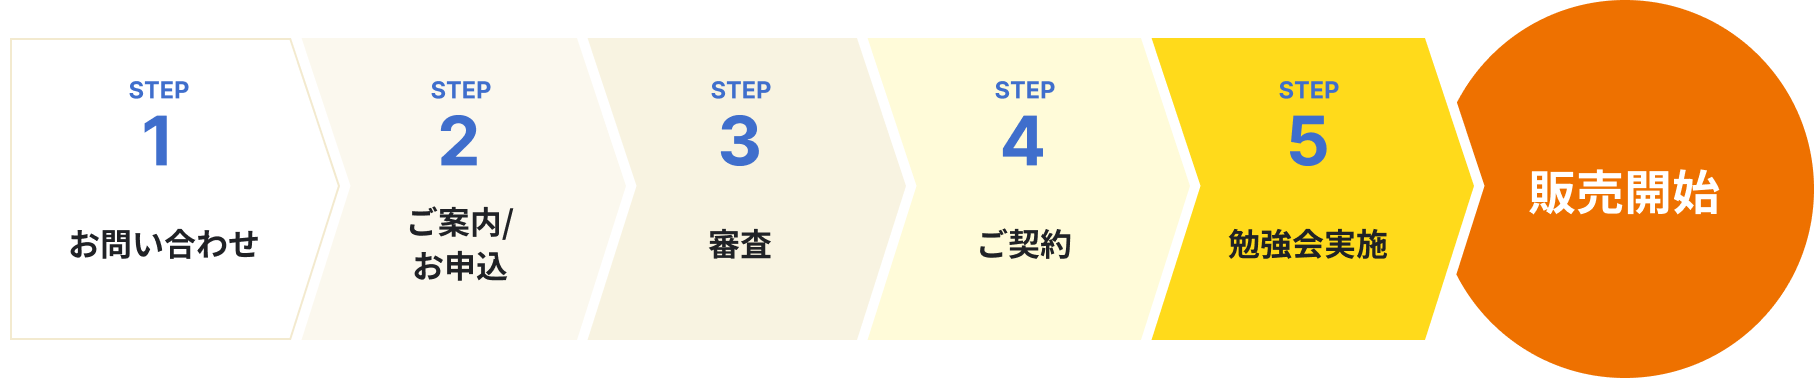 STEP1:お問い合わせ→STEP2:ご案内/お申し込み→STEP3:審査→STEP4:ご契約→STEP5:勉強会実施→販売開始